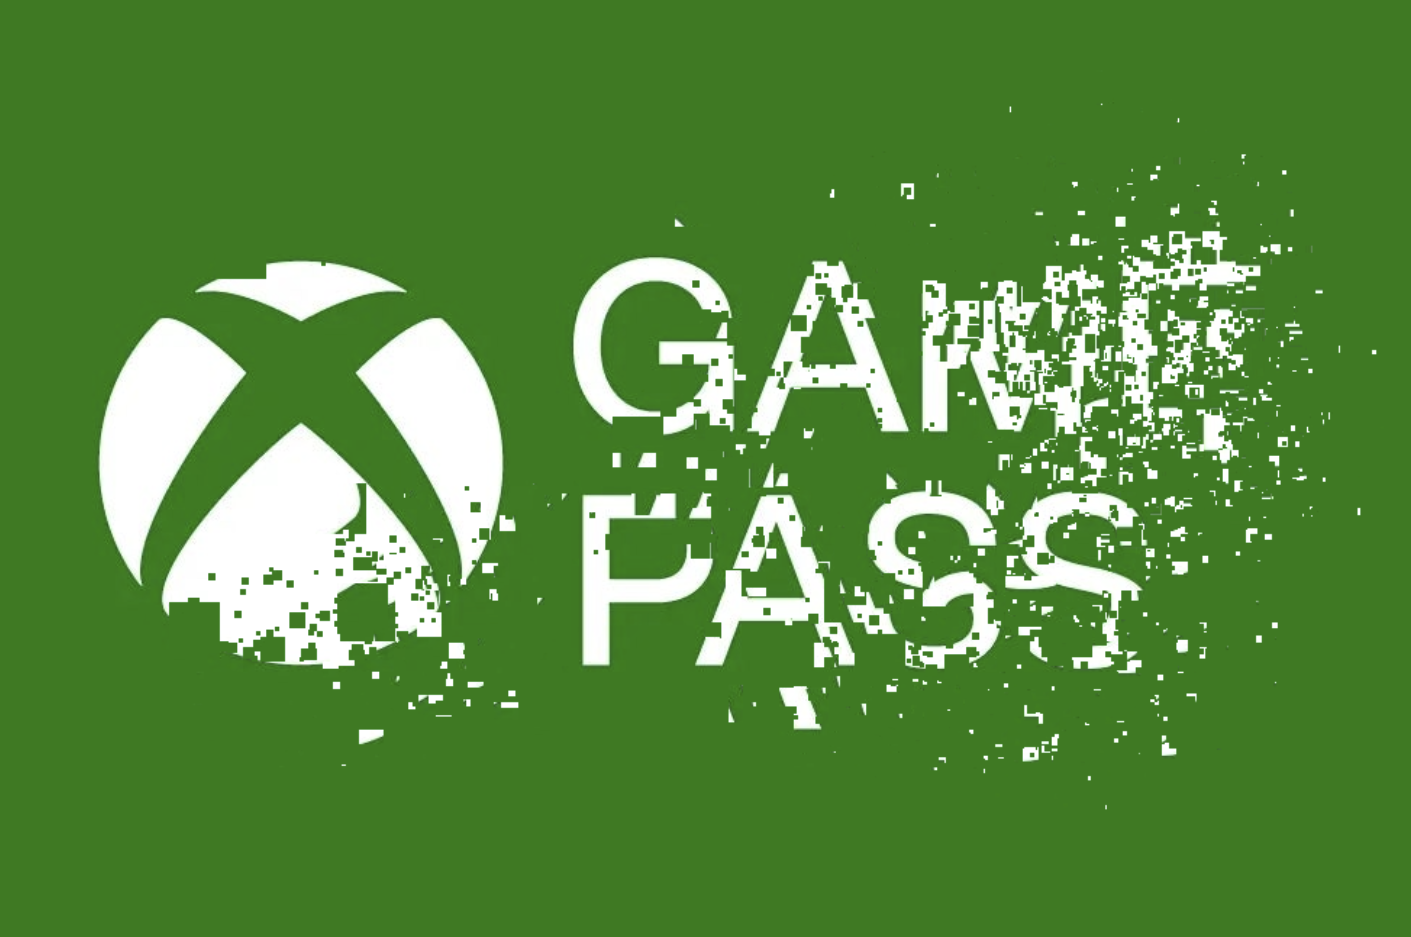 The Xbox game pass logo, white on a green background, dissolving